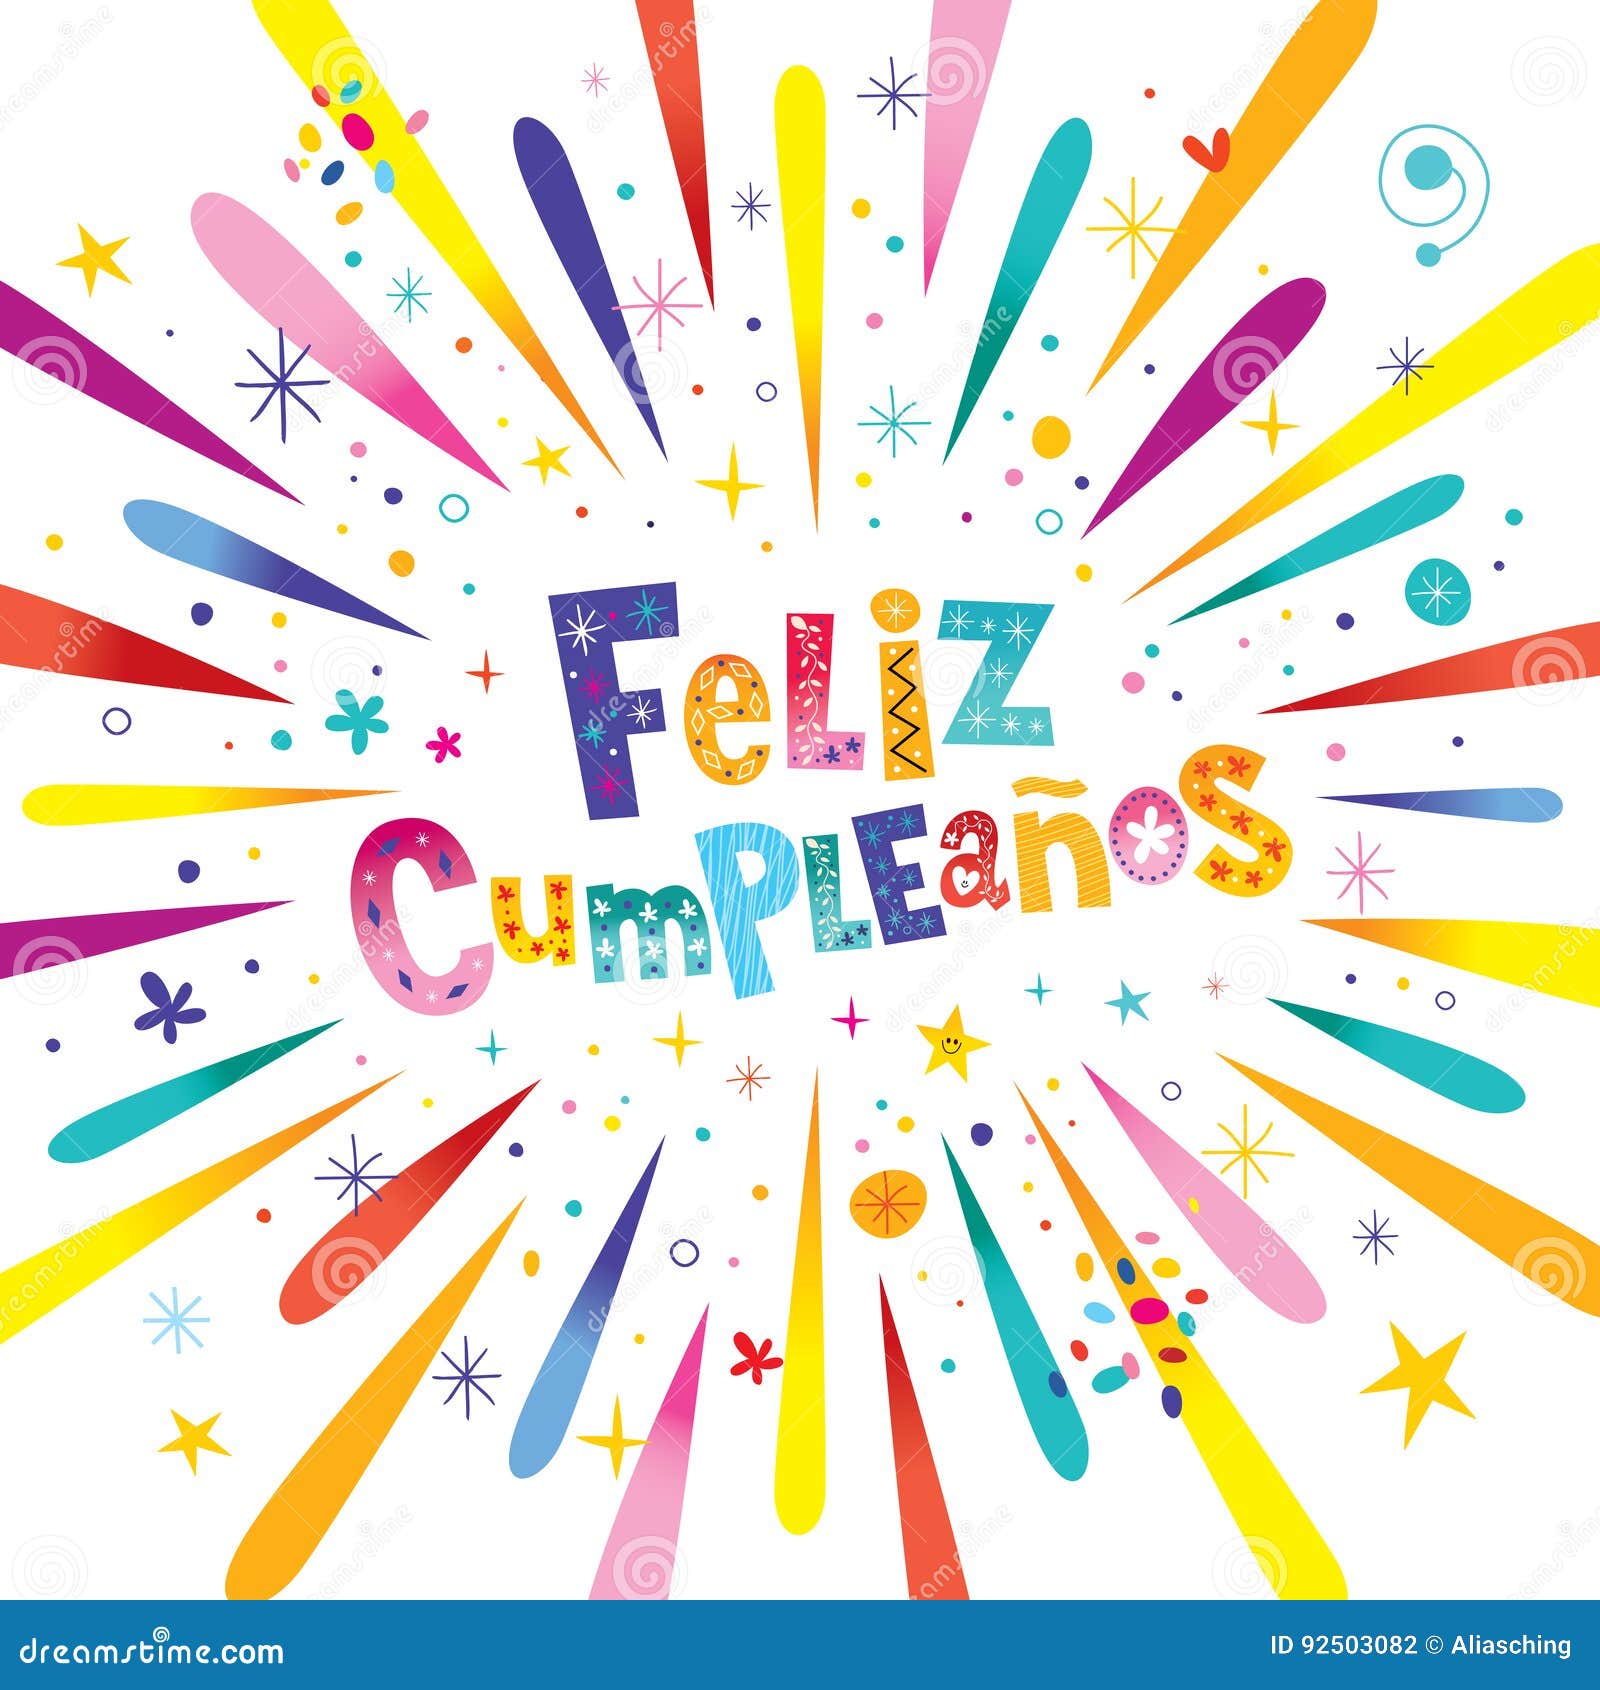 feliz cumpleanos happy birthday in spanish